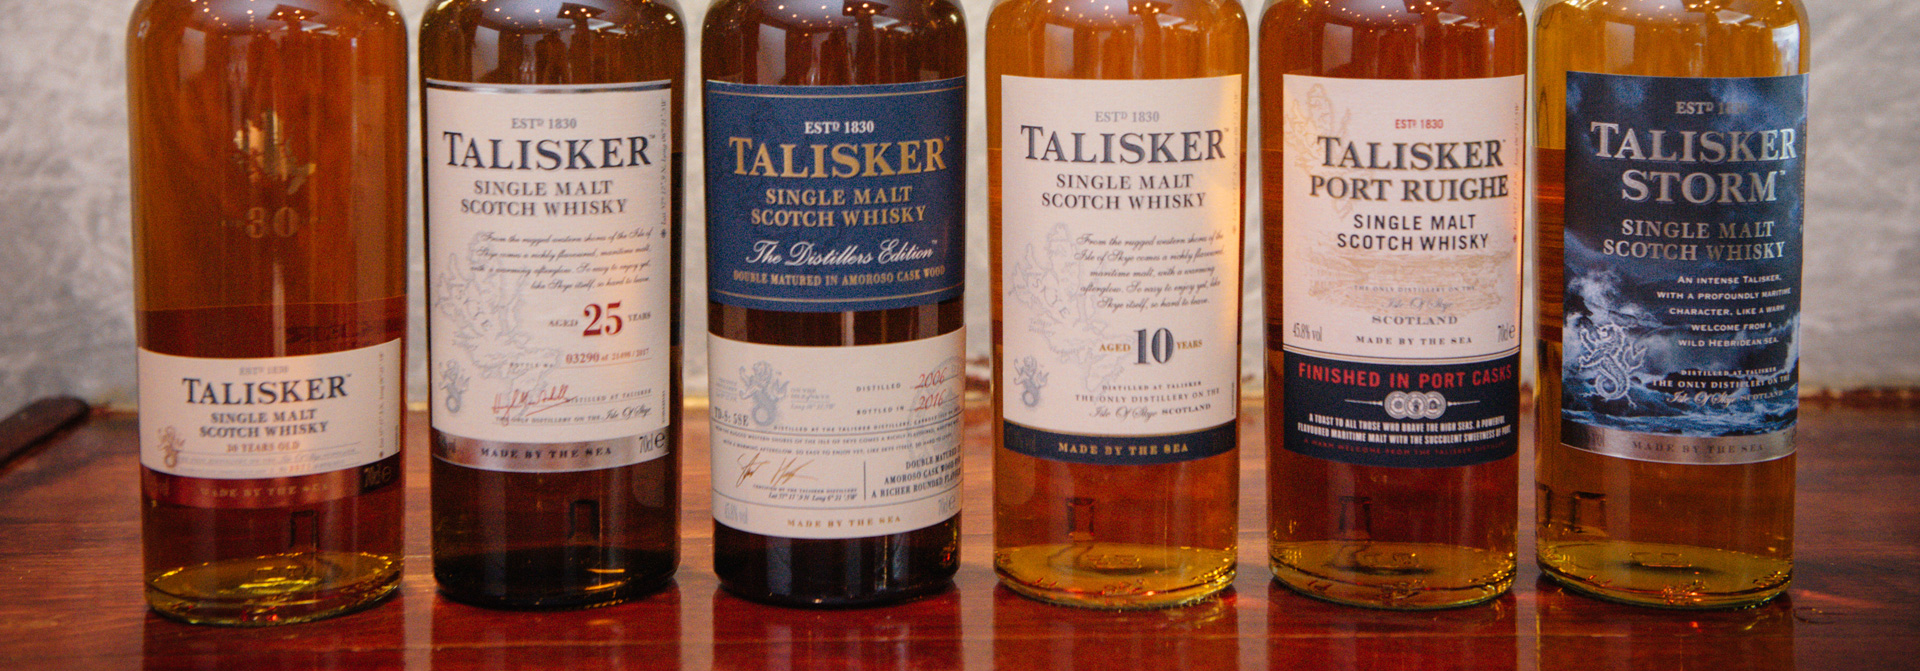 the tasters club whisky tasting day talisker 4wine ουισκι